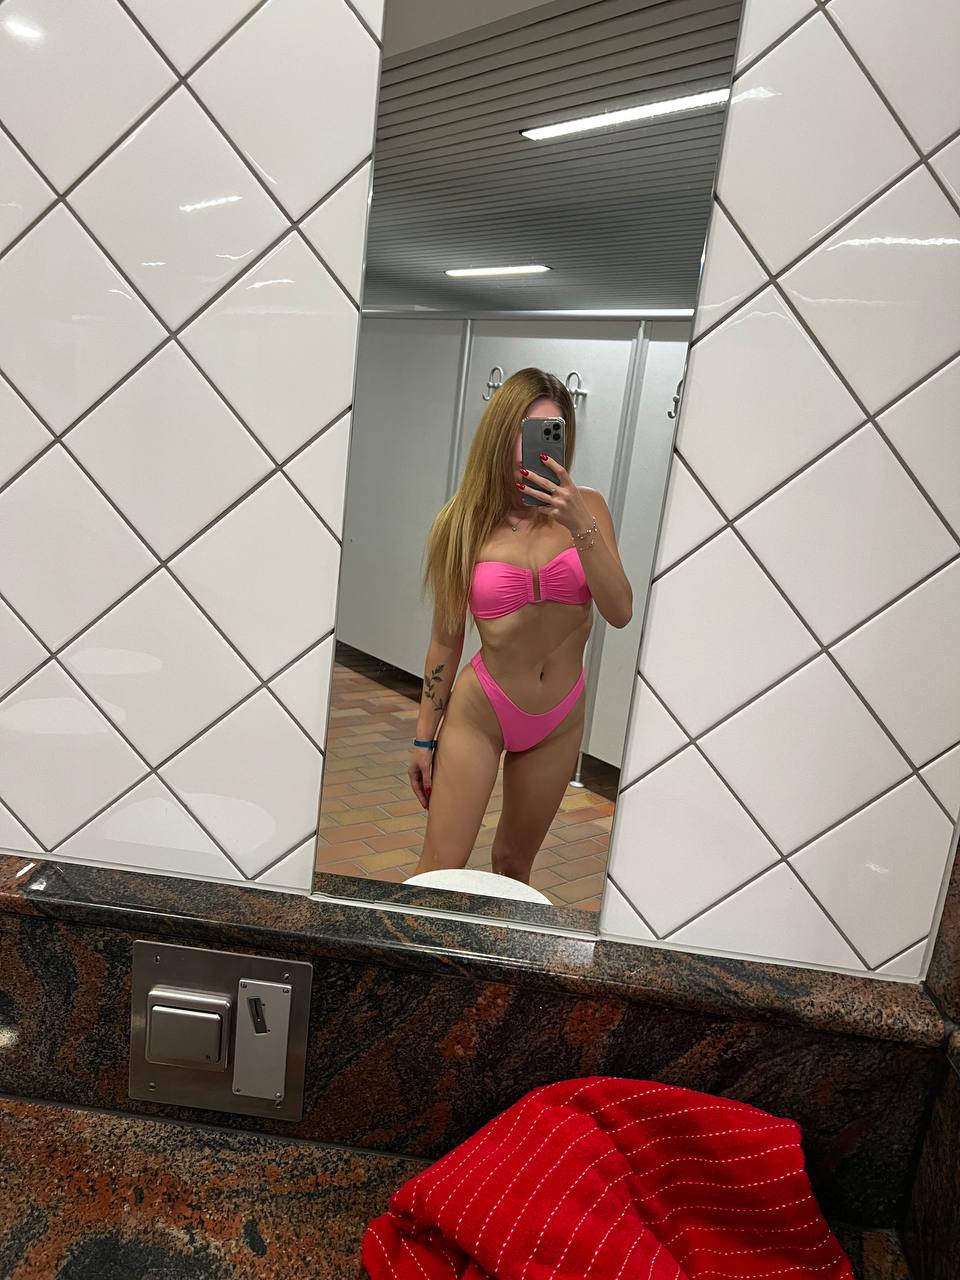 Hope You Find Me Cute In This Pink Bikini!